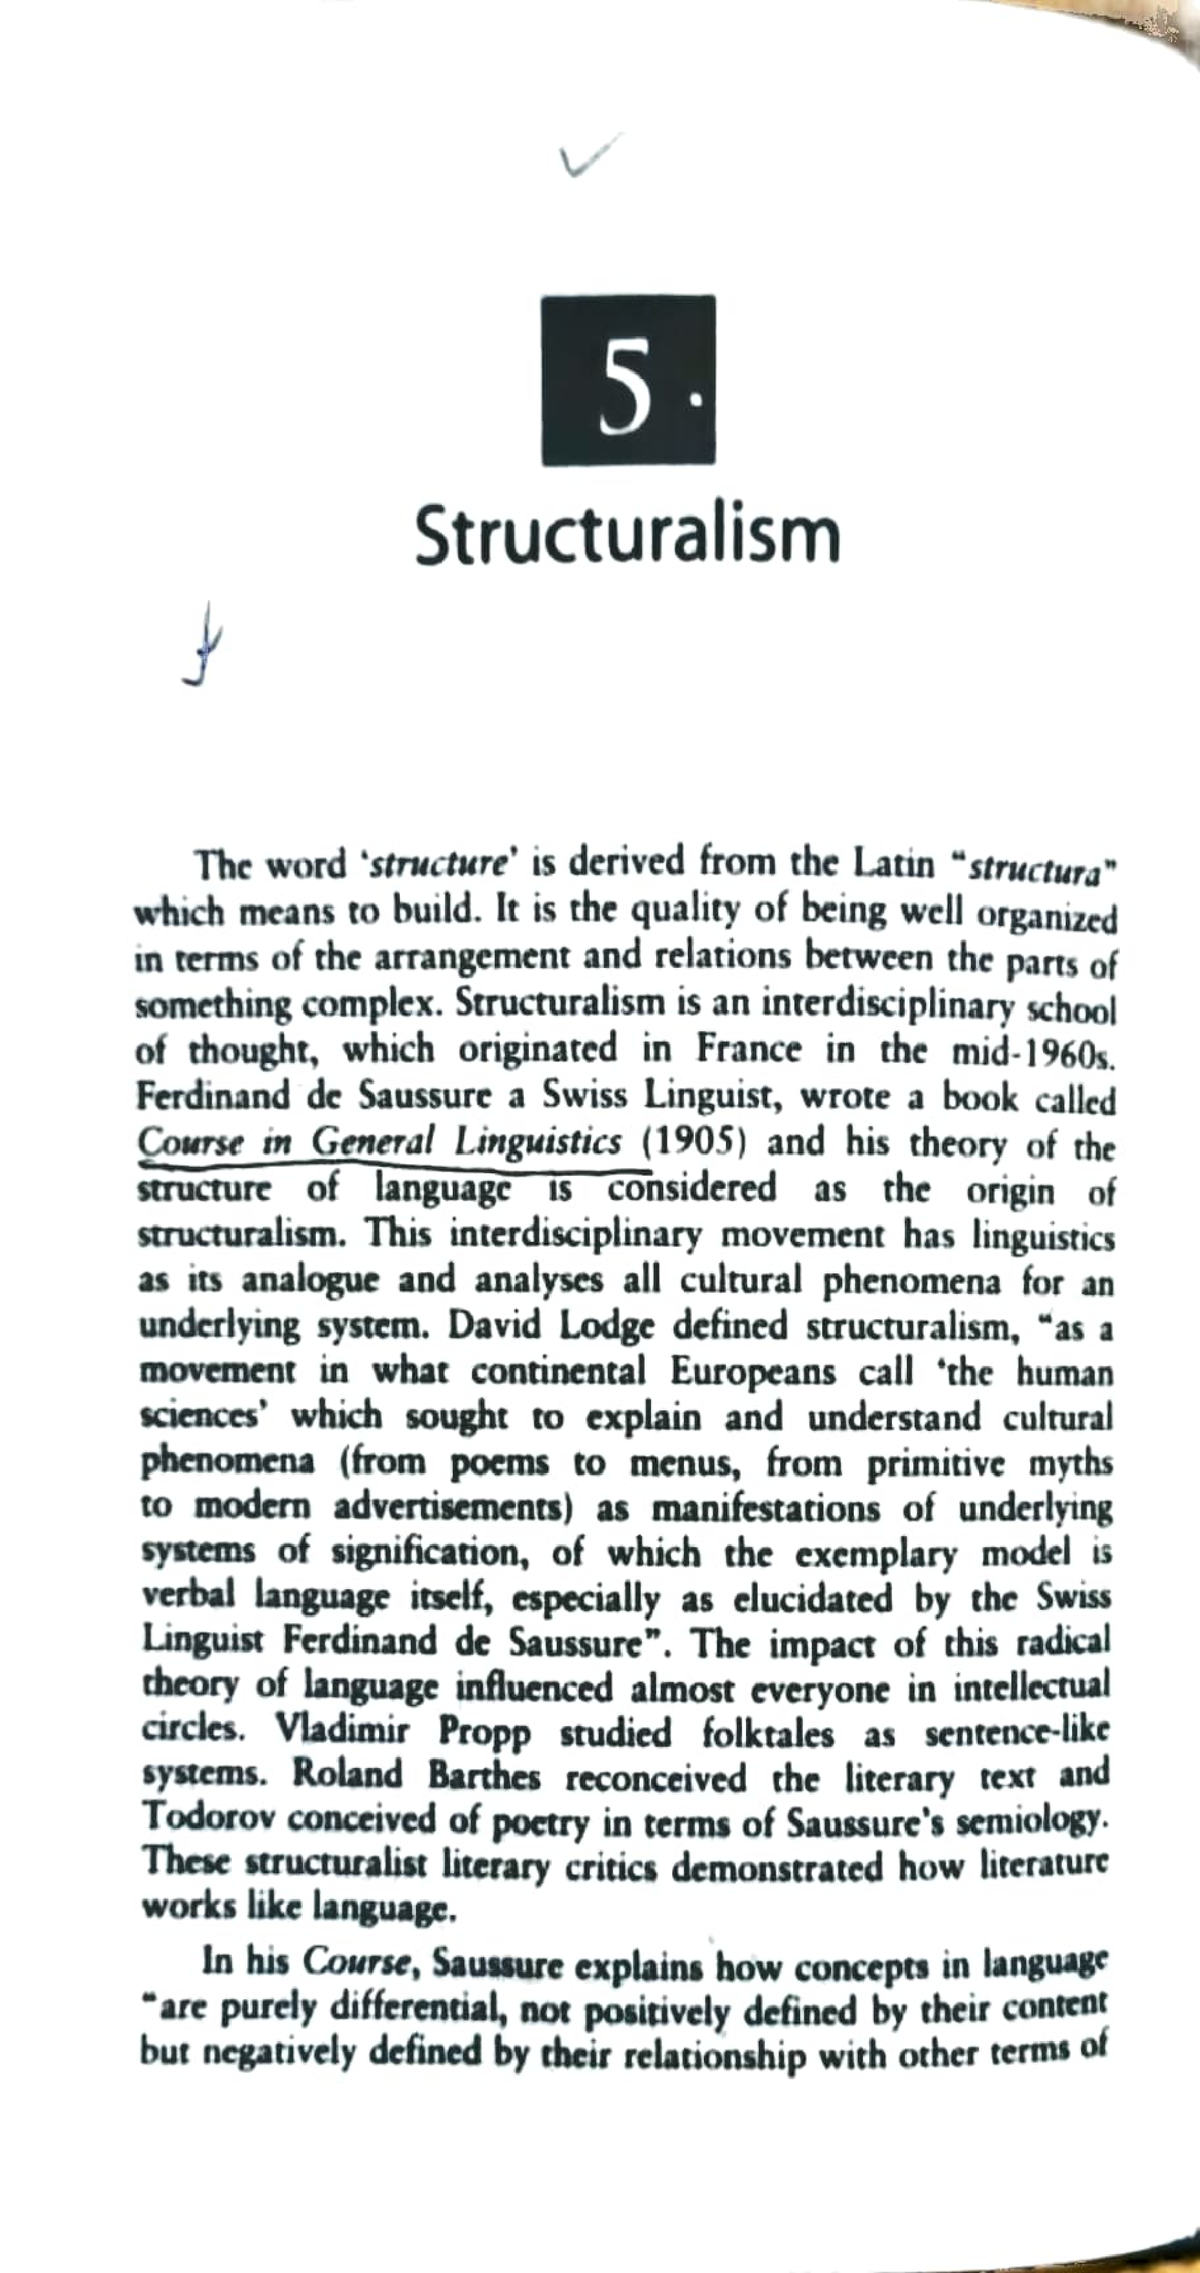 gerard genette structuralism and literary criticism